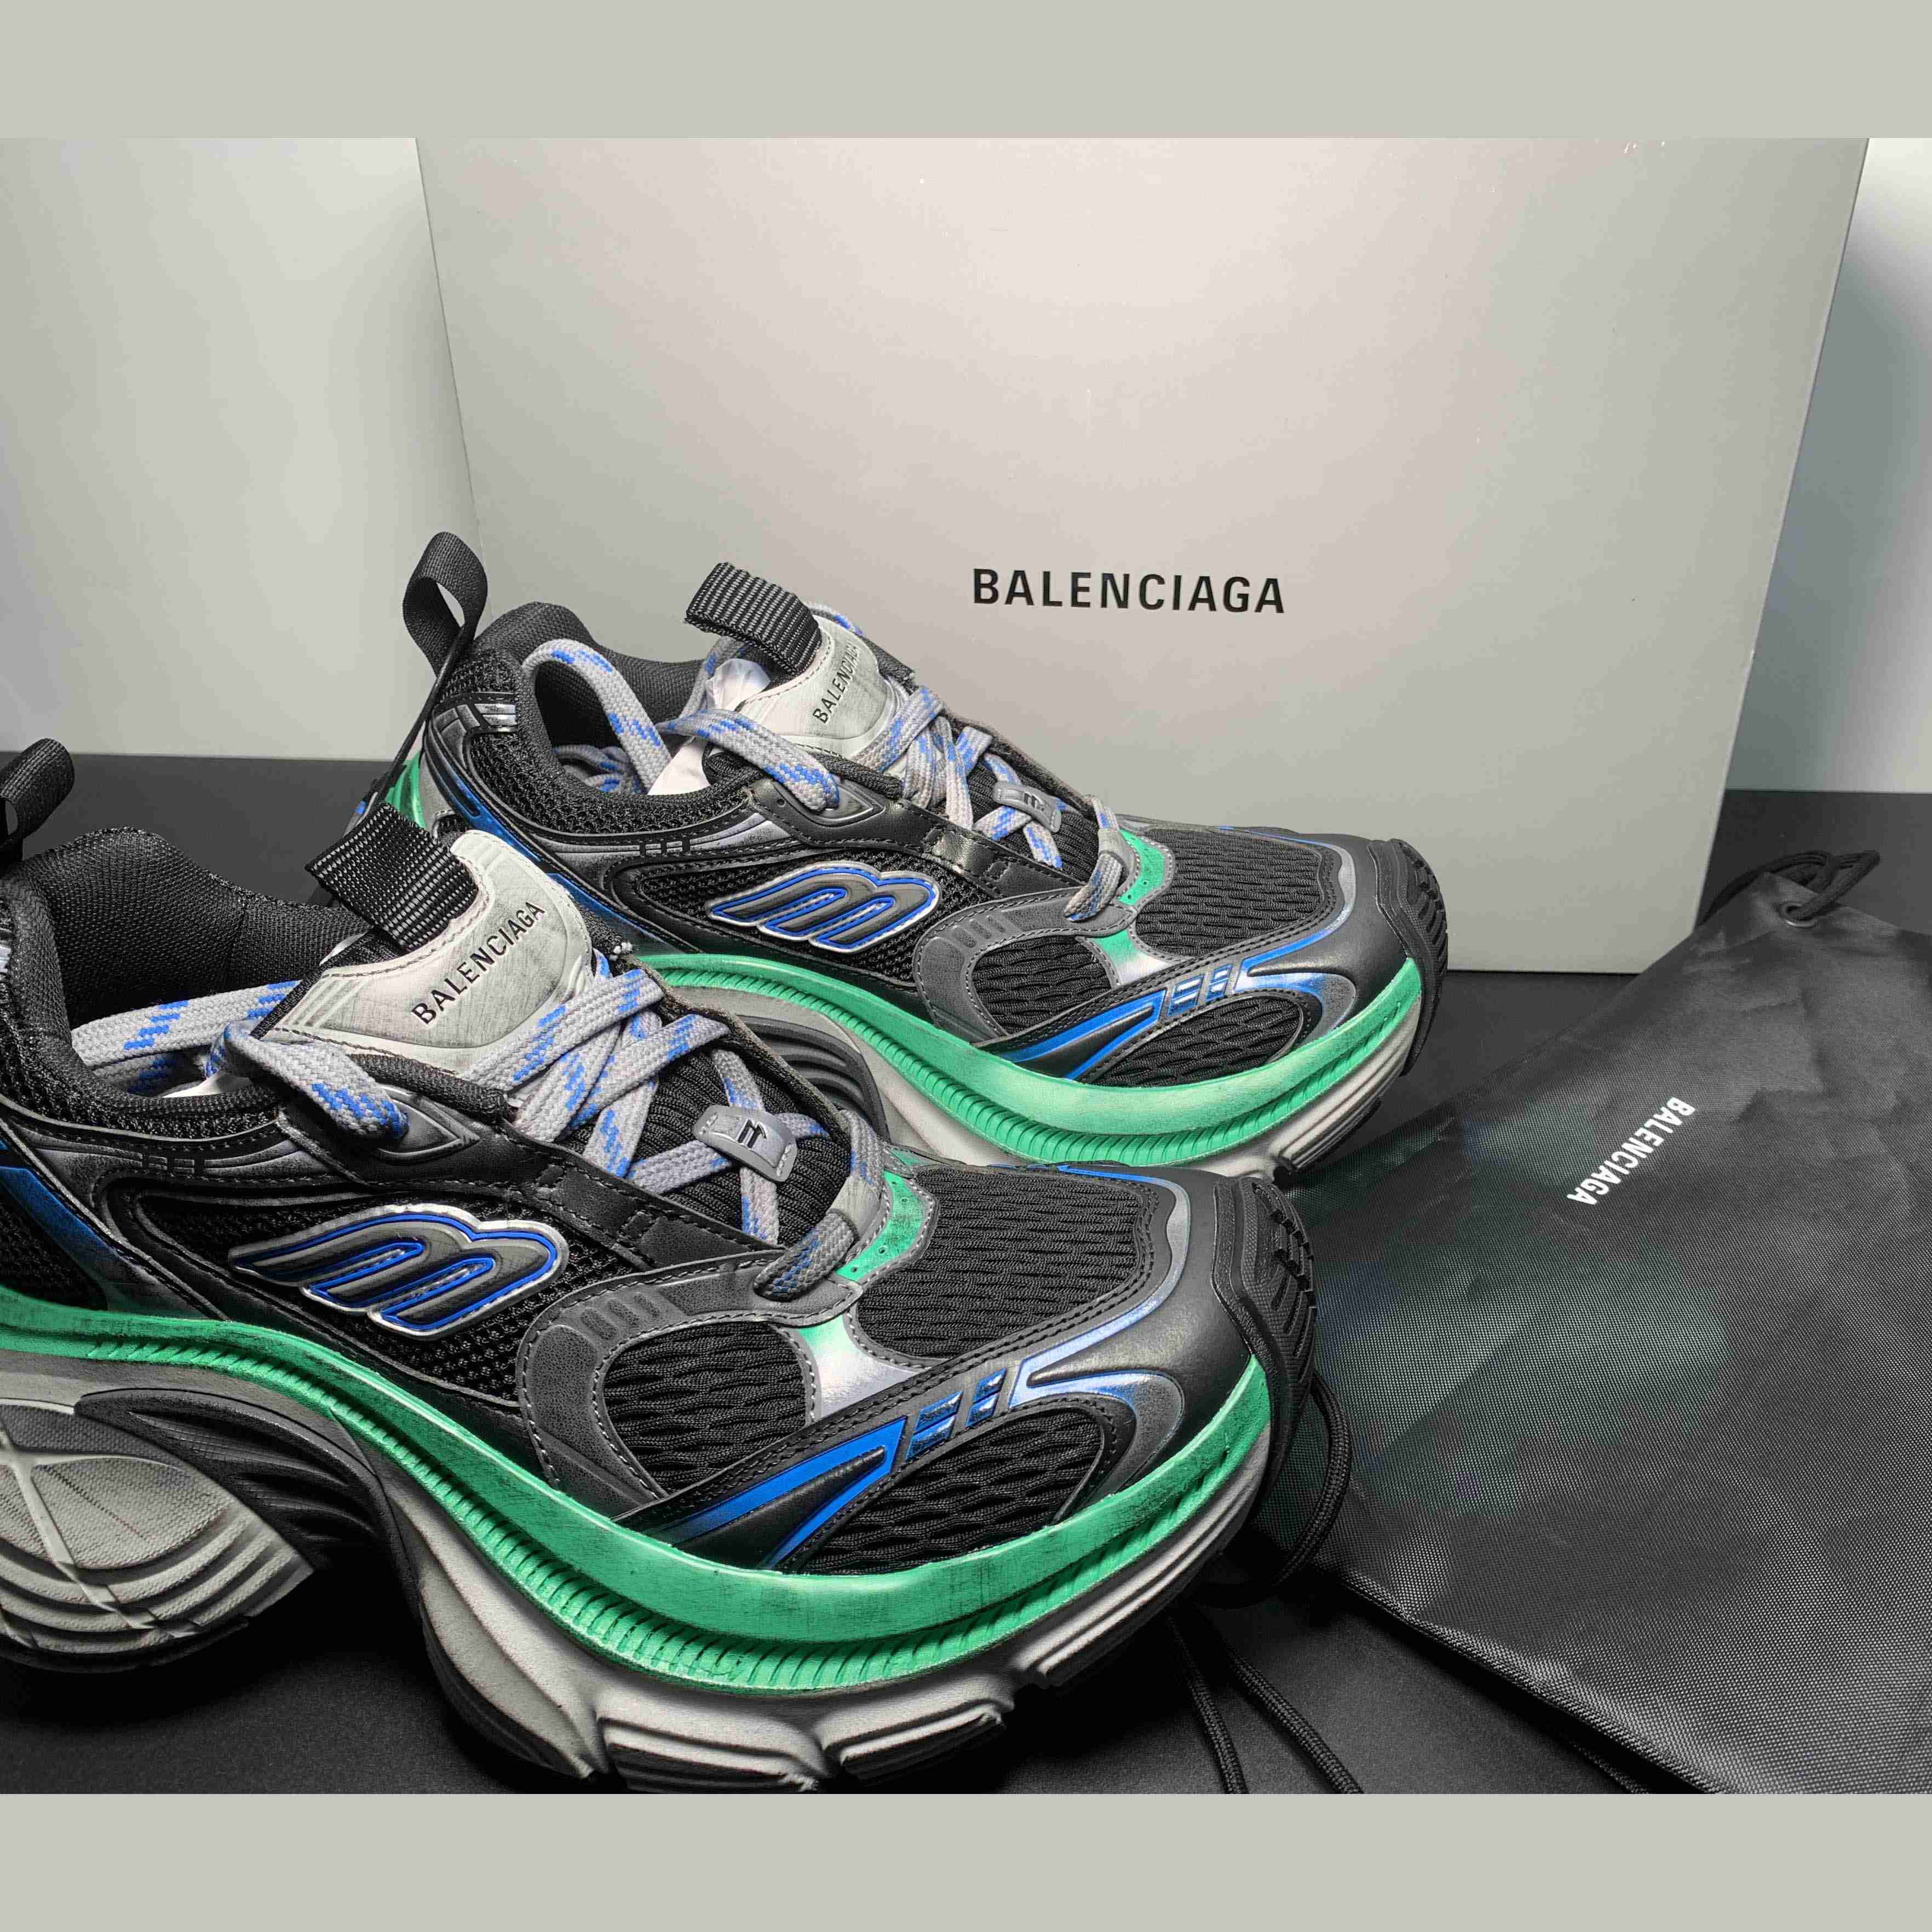 Balenciaga 10XL Sneaker in Black/Grey/Blue/Green - DesignerGu